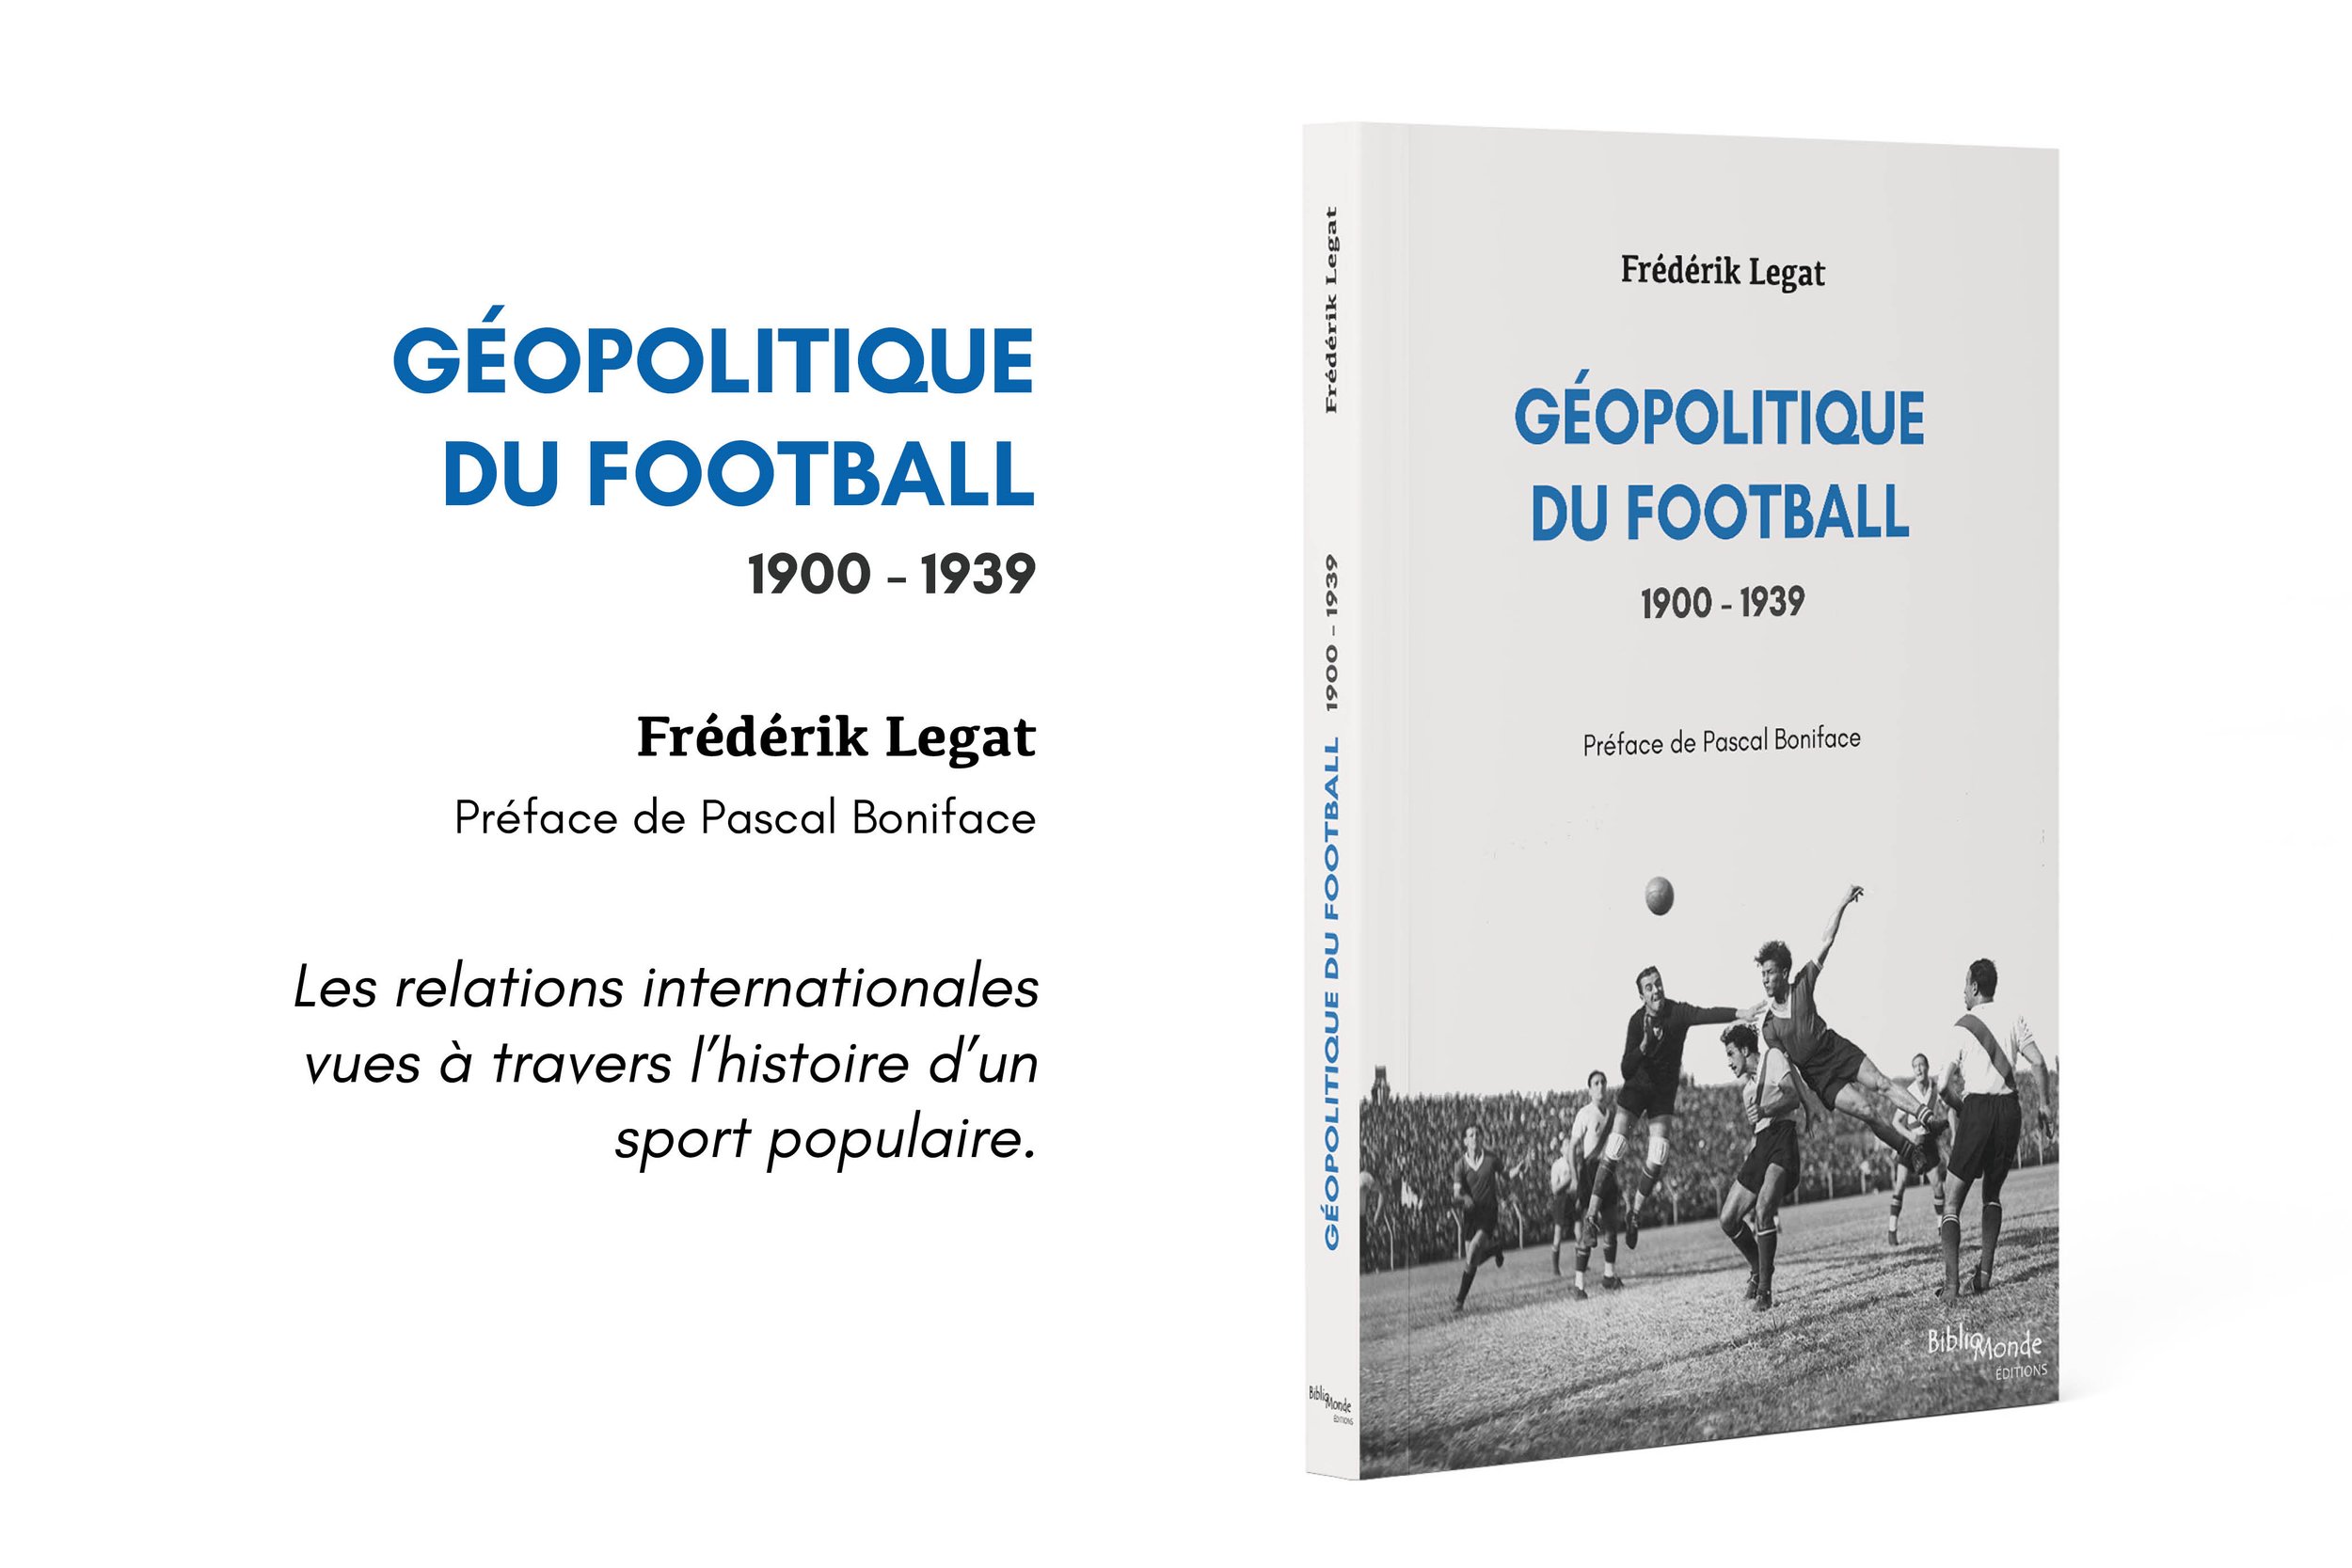 geopolitique-football-1900-1939-visu2.jpg